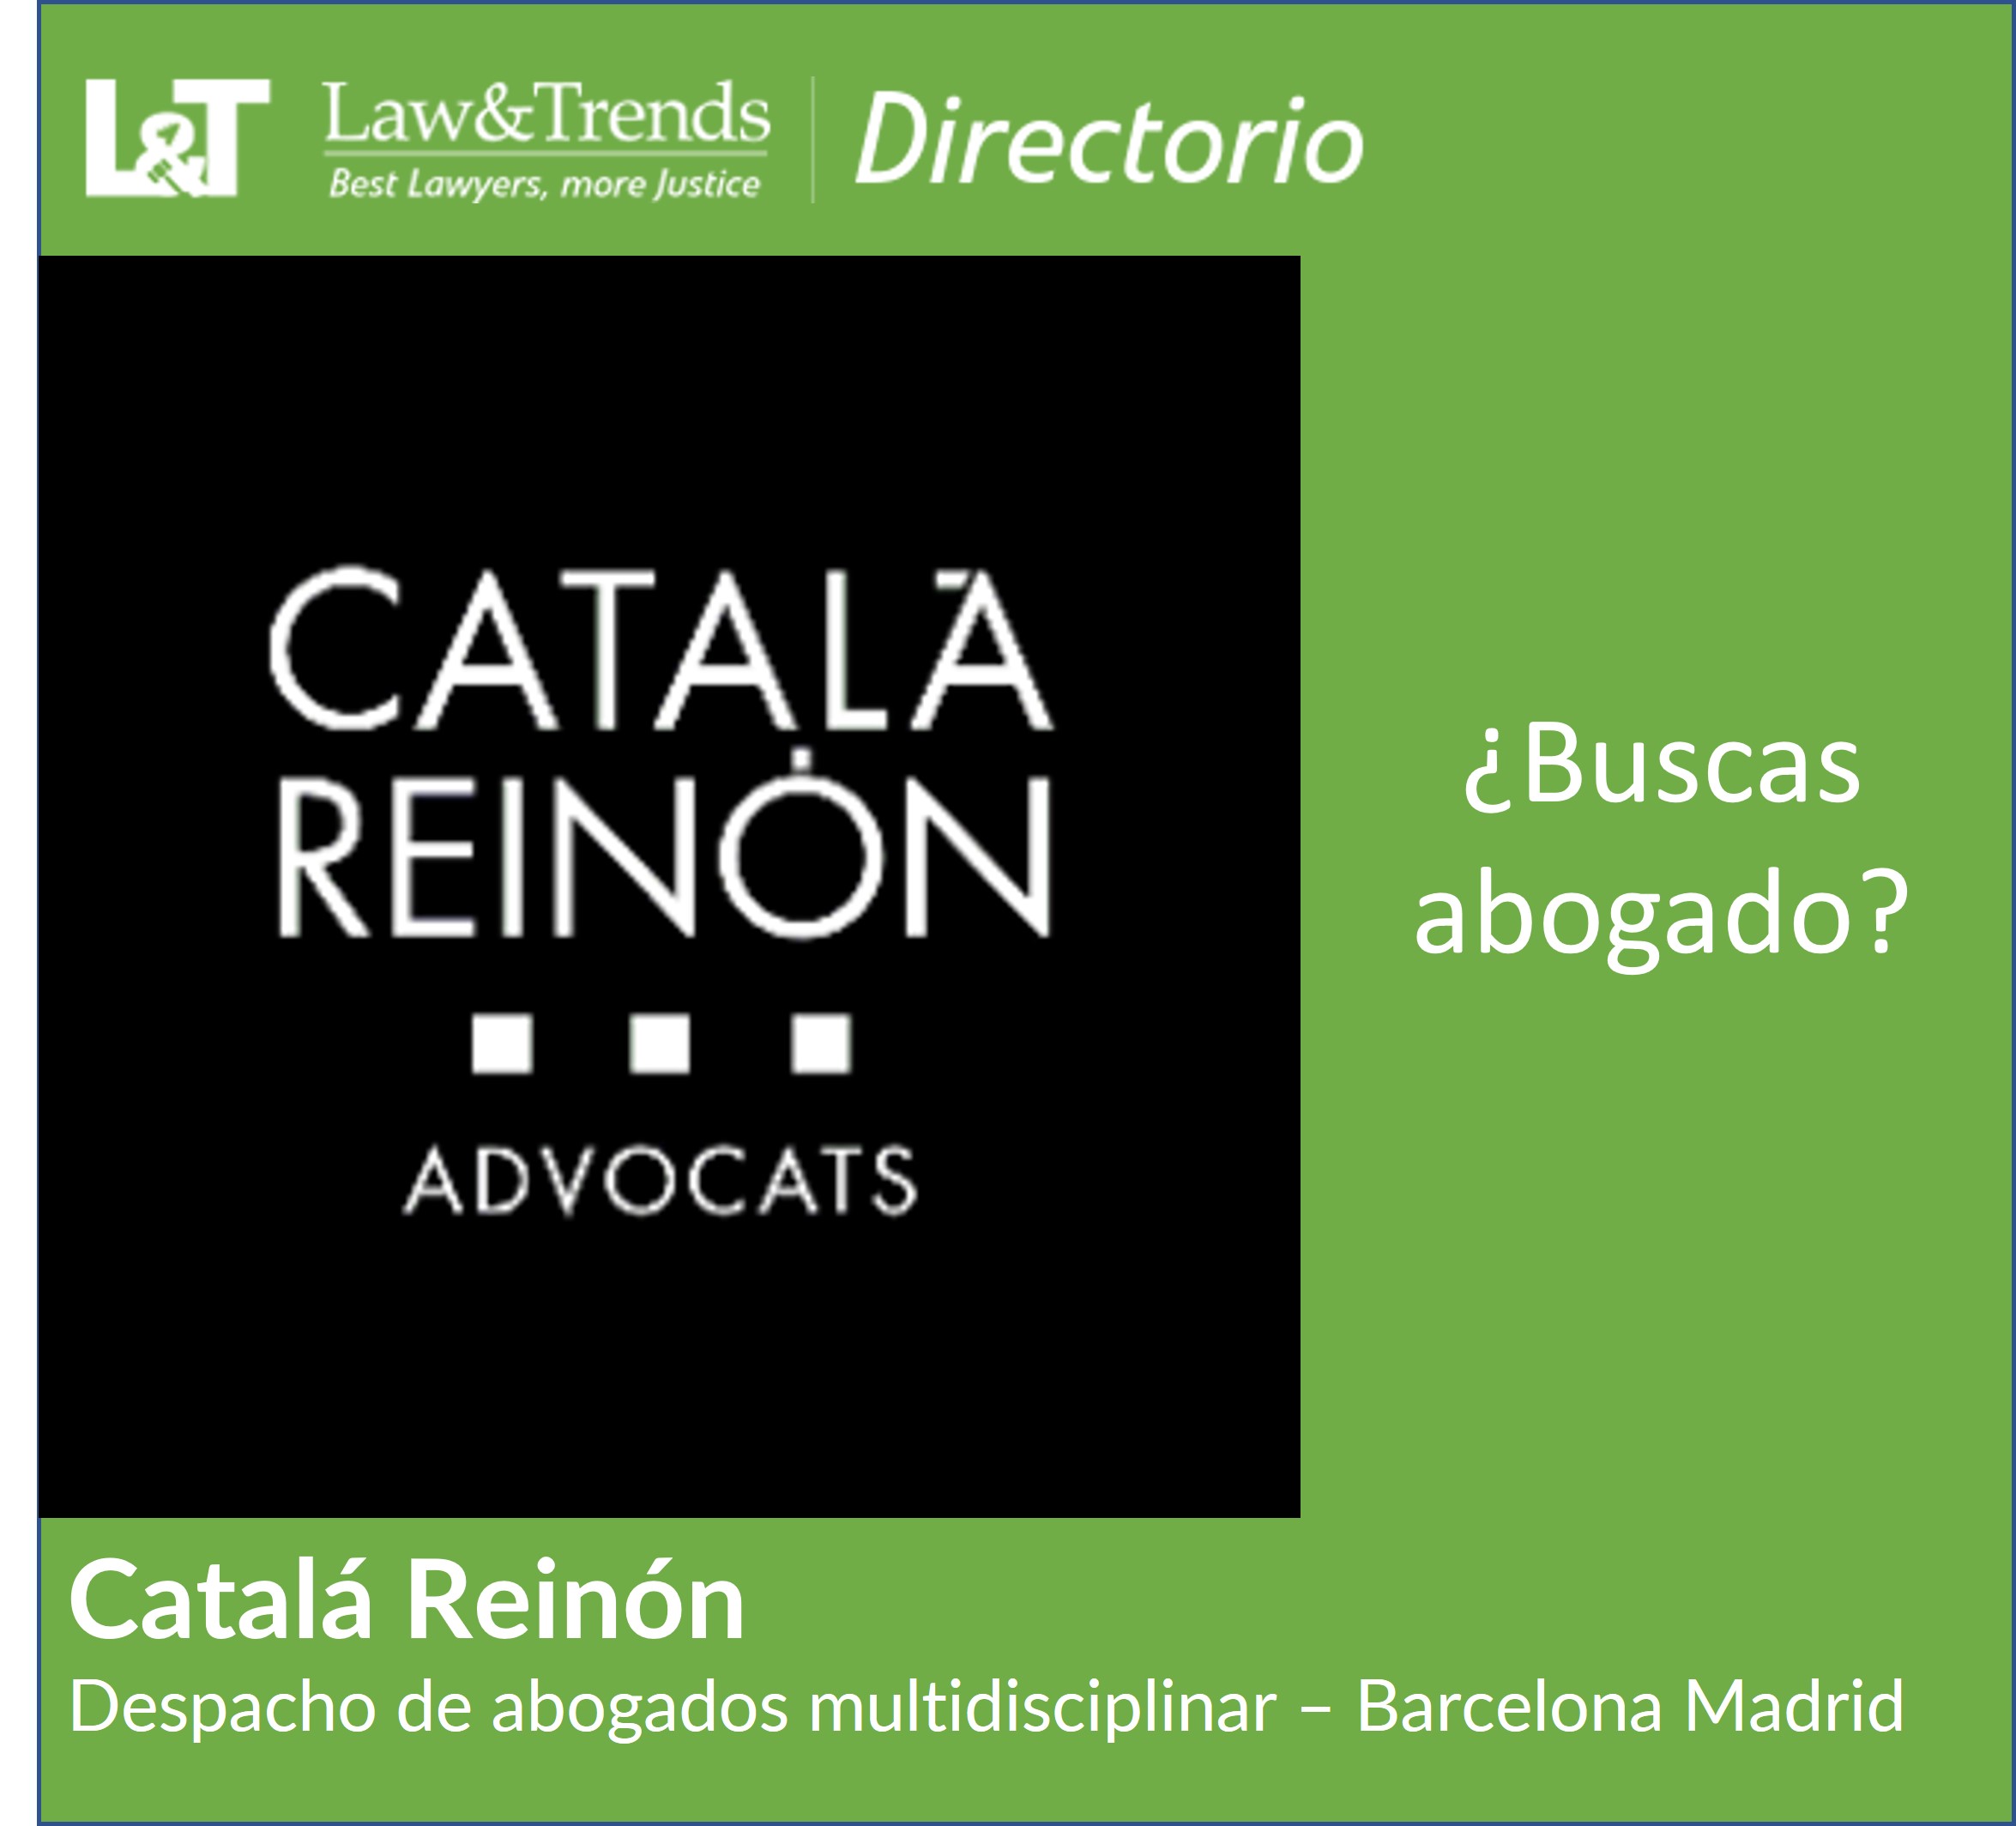 Catala abogados Madrid Barcelona
